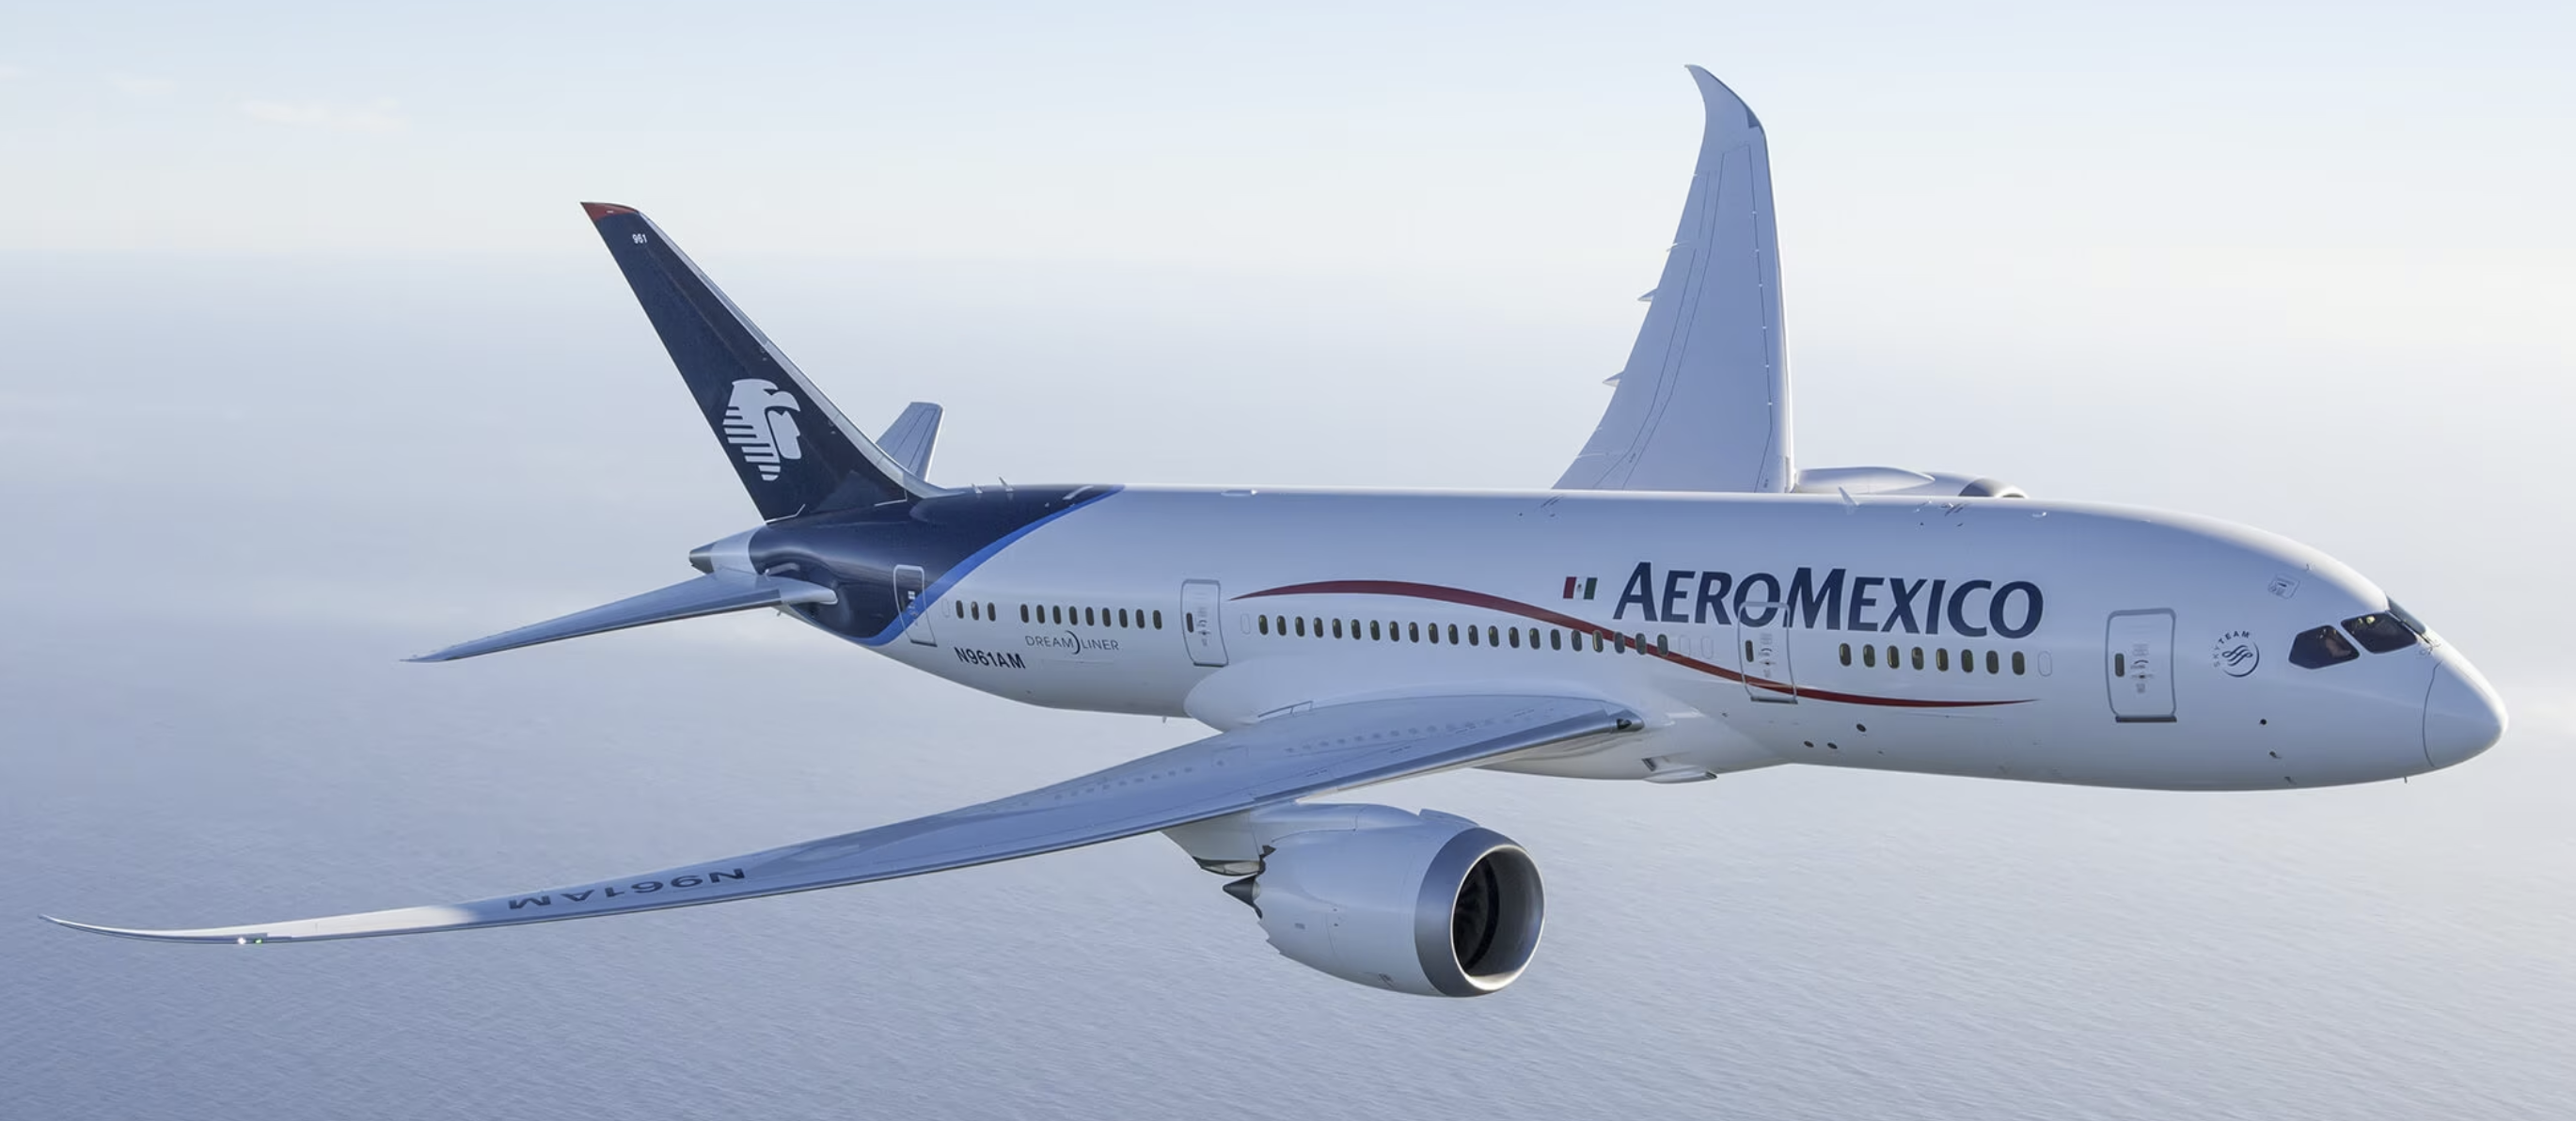 AeroMexico plane flying